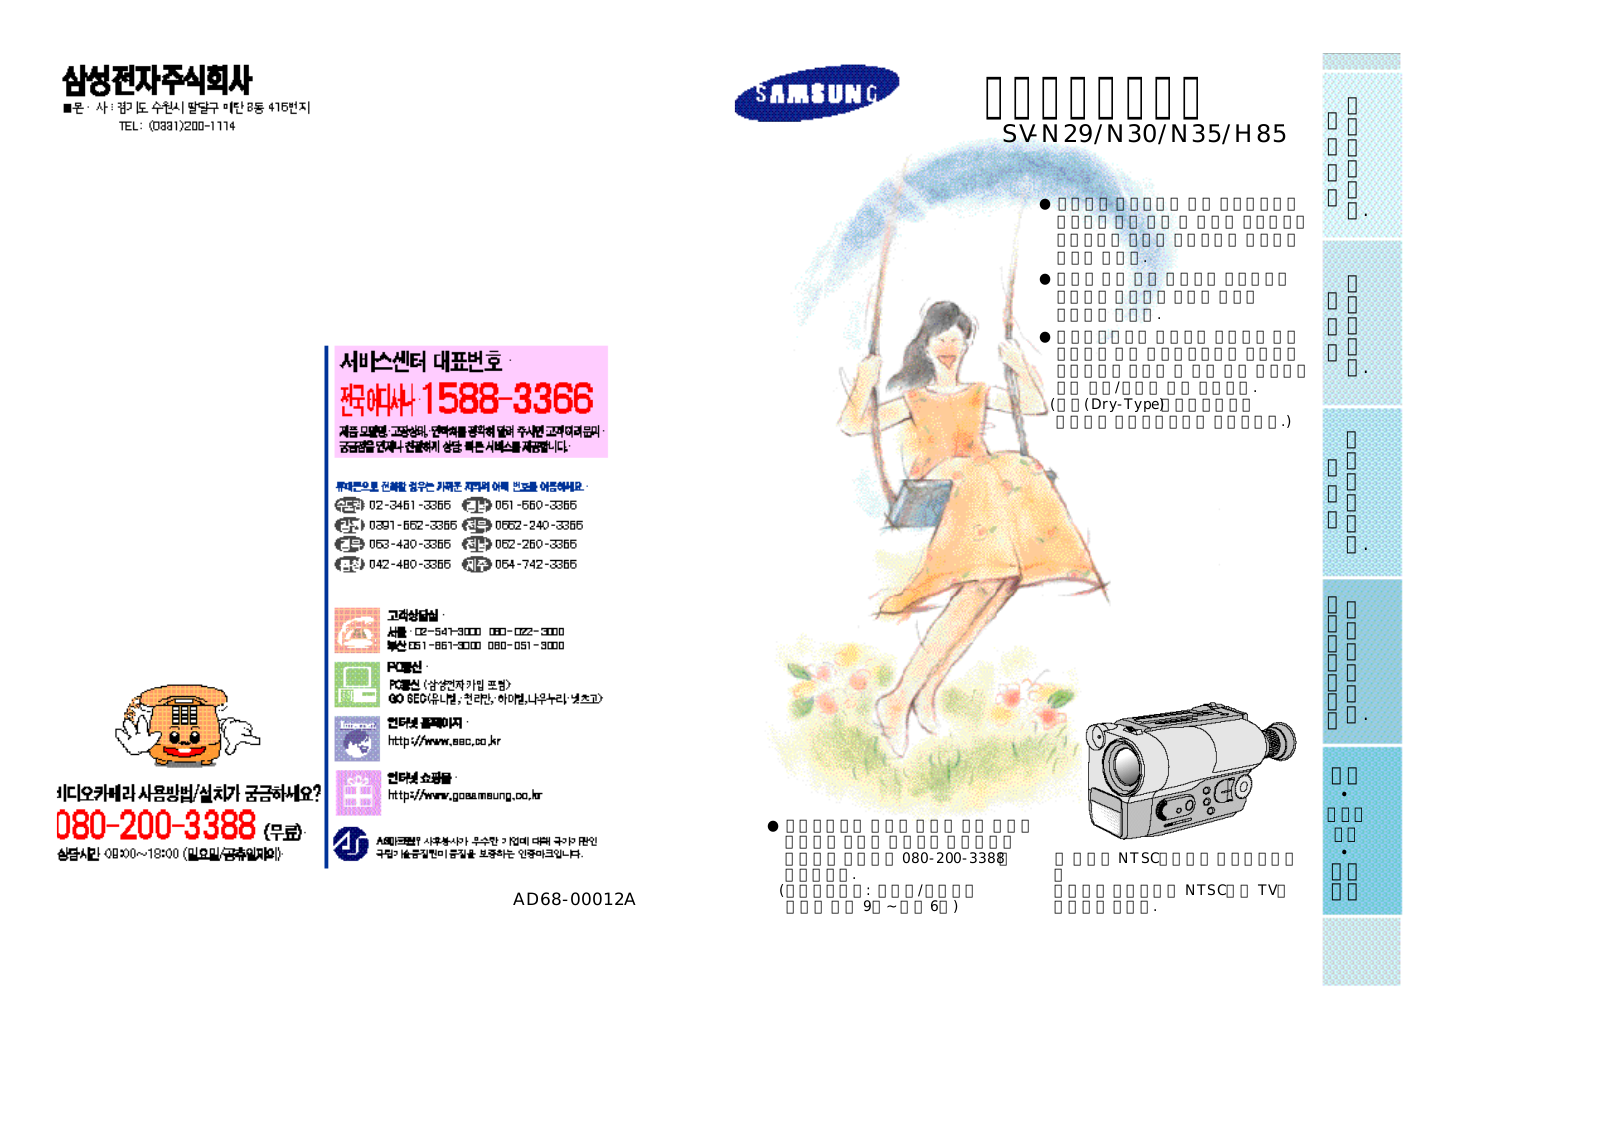 Samsung SV-N35, SV-H85, SV-N30 User Manual